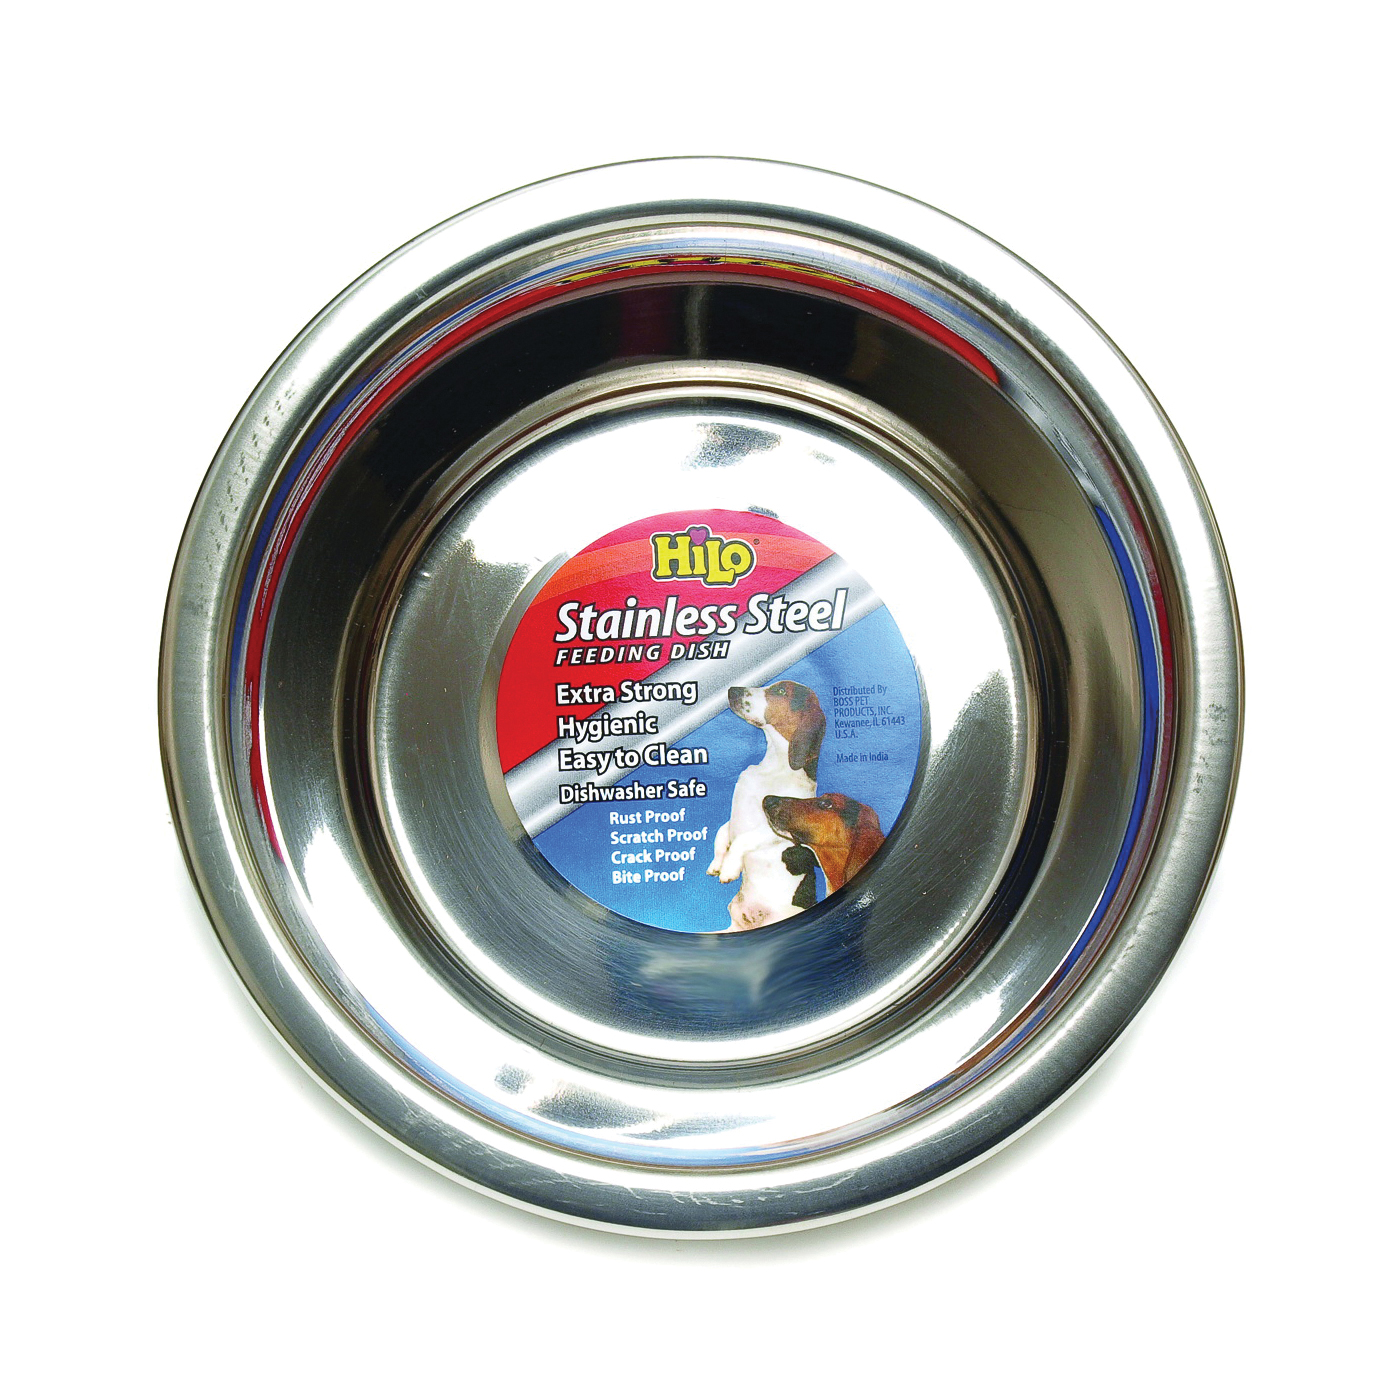 ZW150 98/56670 Pet Feeding Dish, 5 qt Volume, Stainless Steel